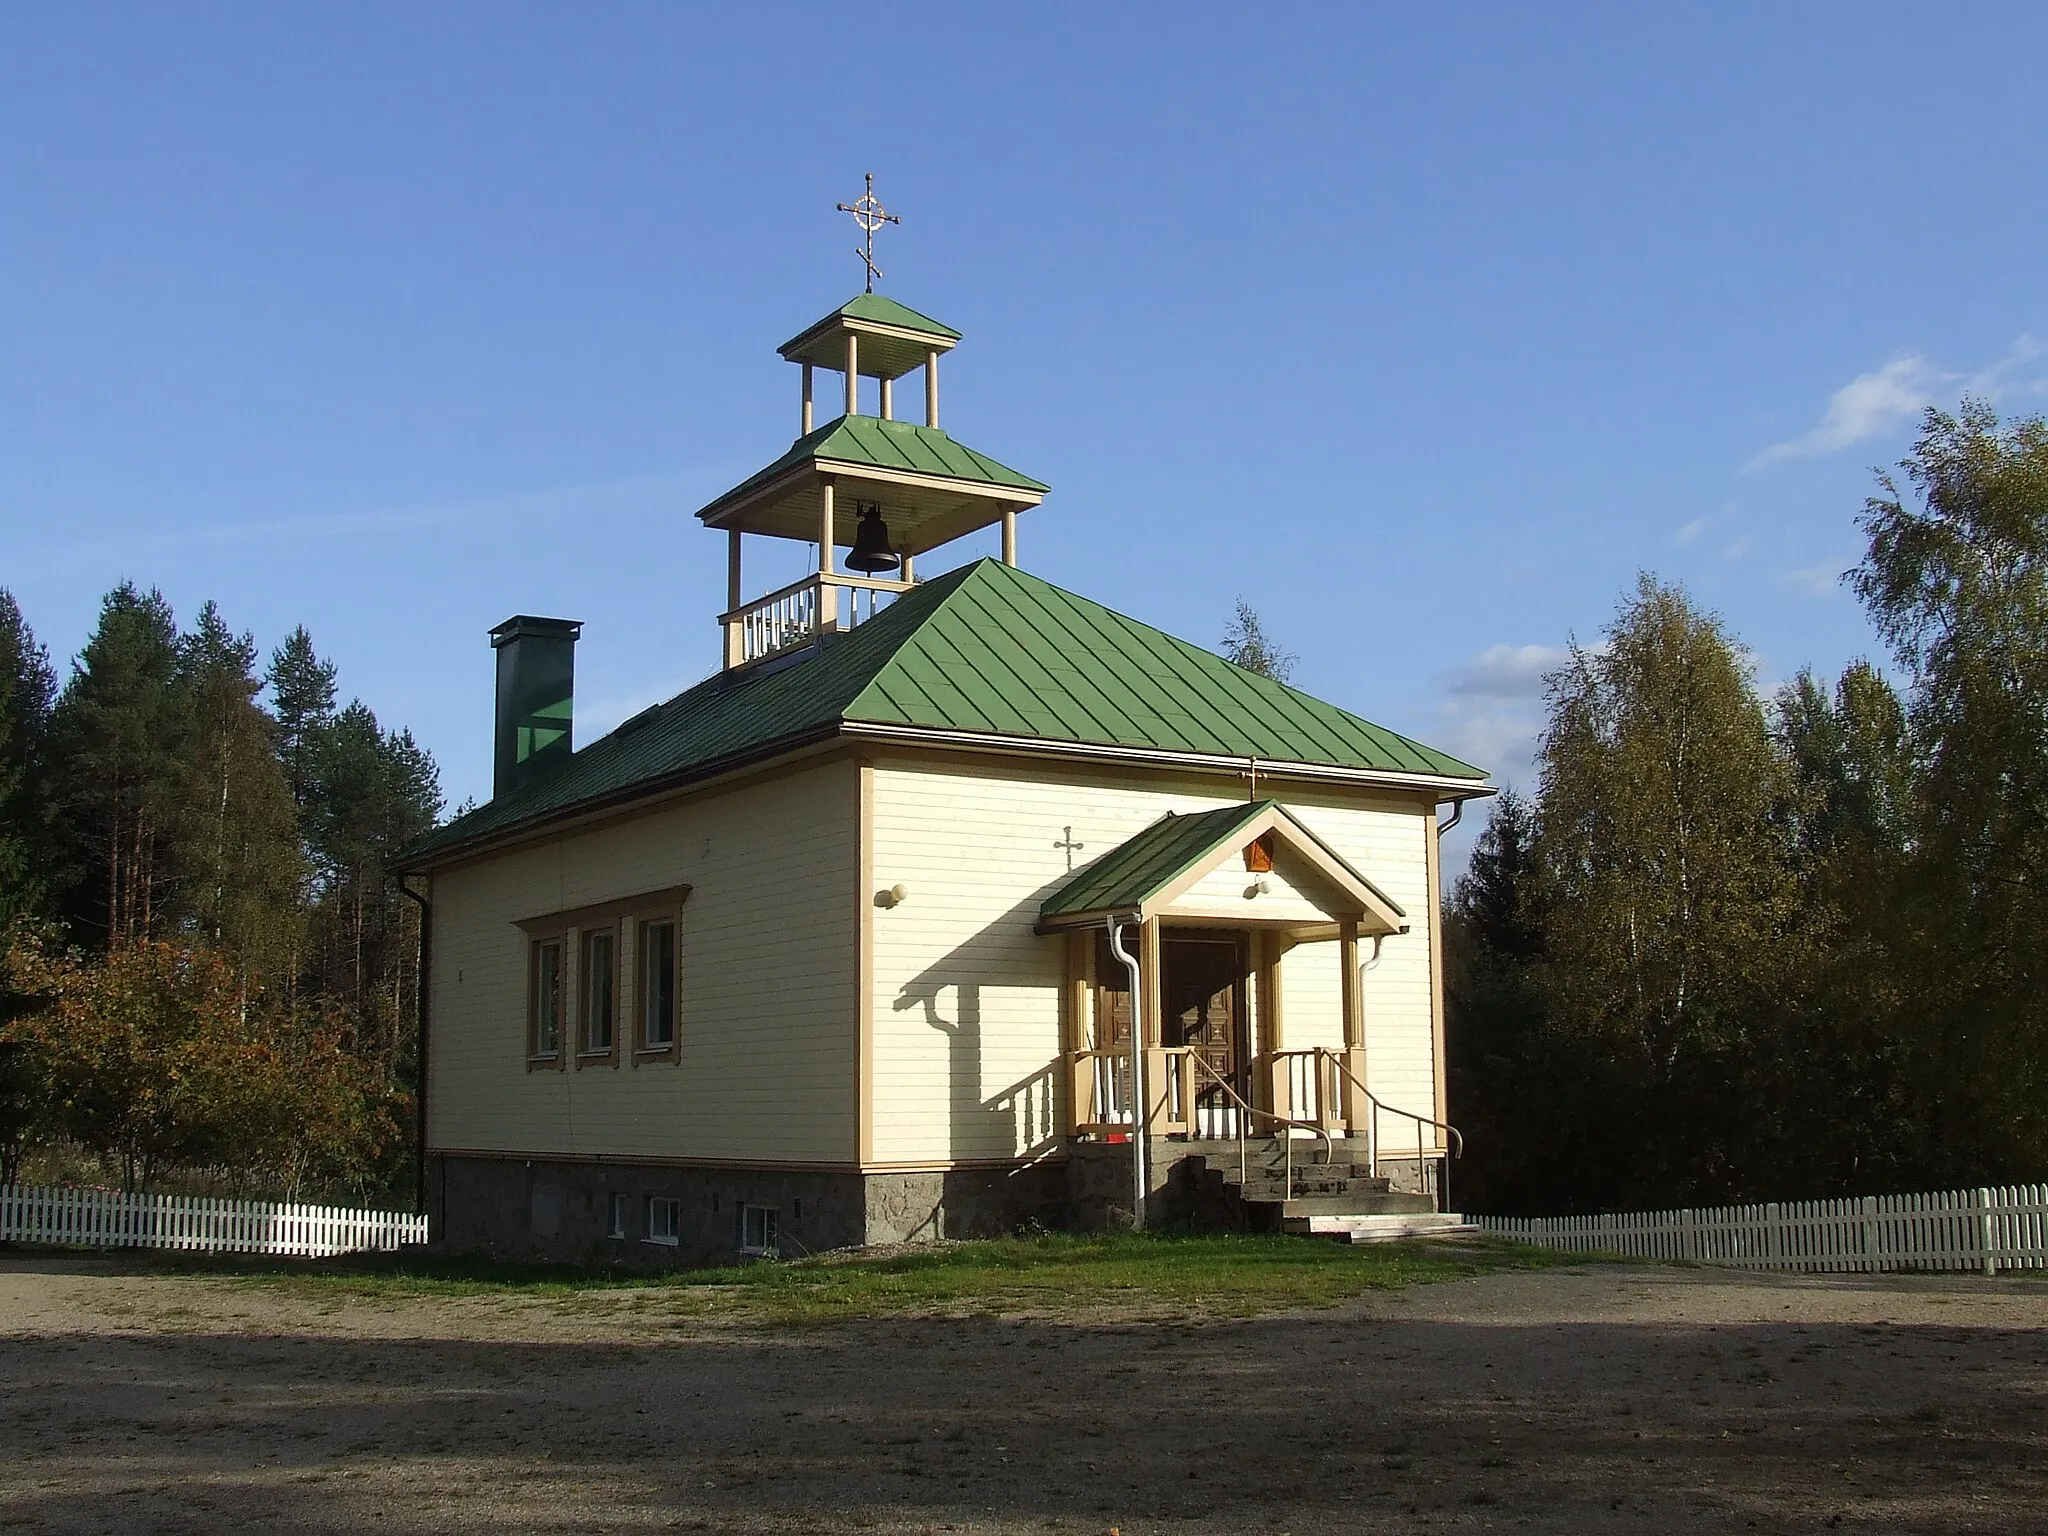 Photo showing: Hoilola orthodox church in Joensuu, Finland.